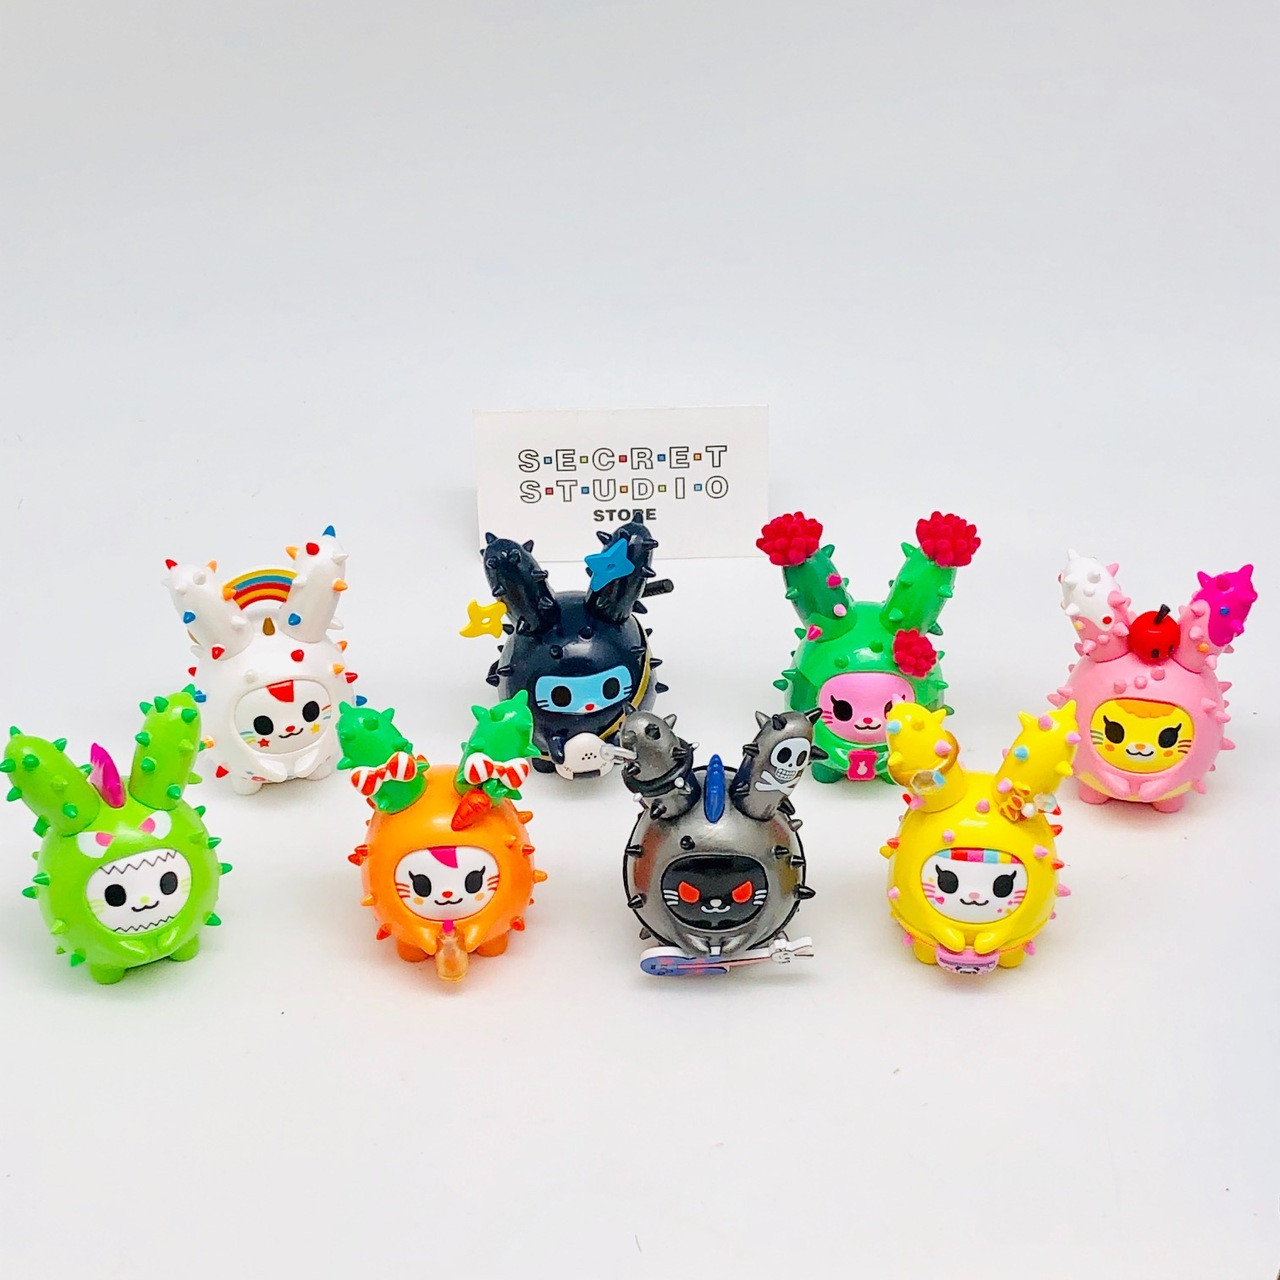 Details about   Tokidoki Cactus Bunny Cute Art Designer Toy Figurine Display Figure Gift Decor